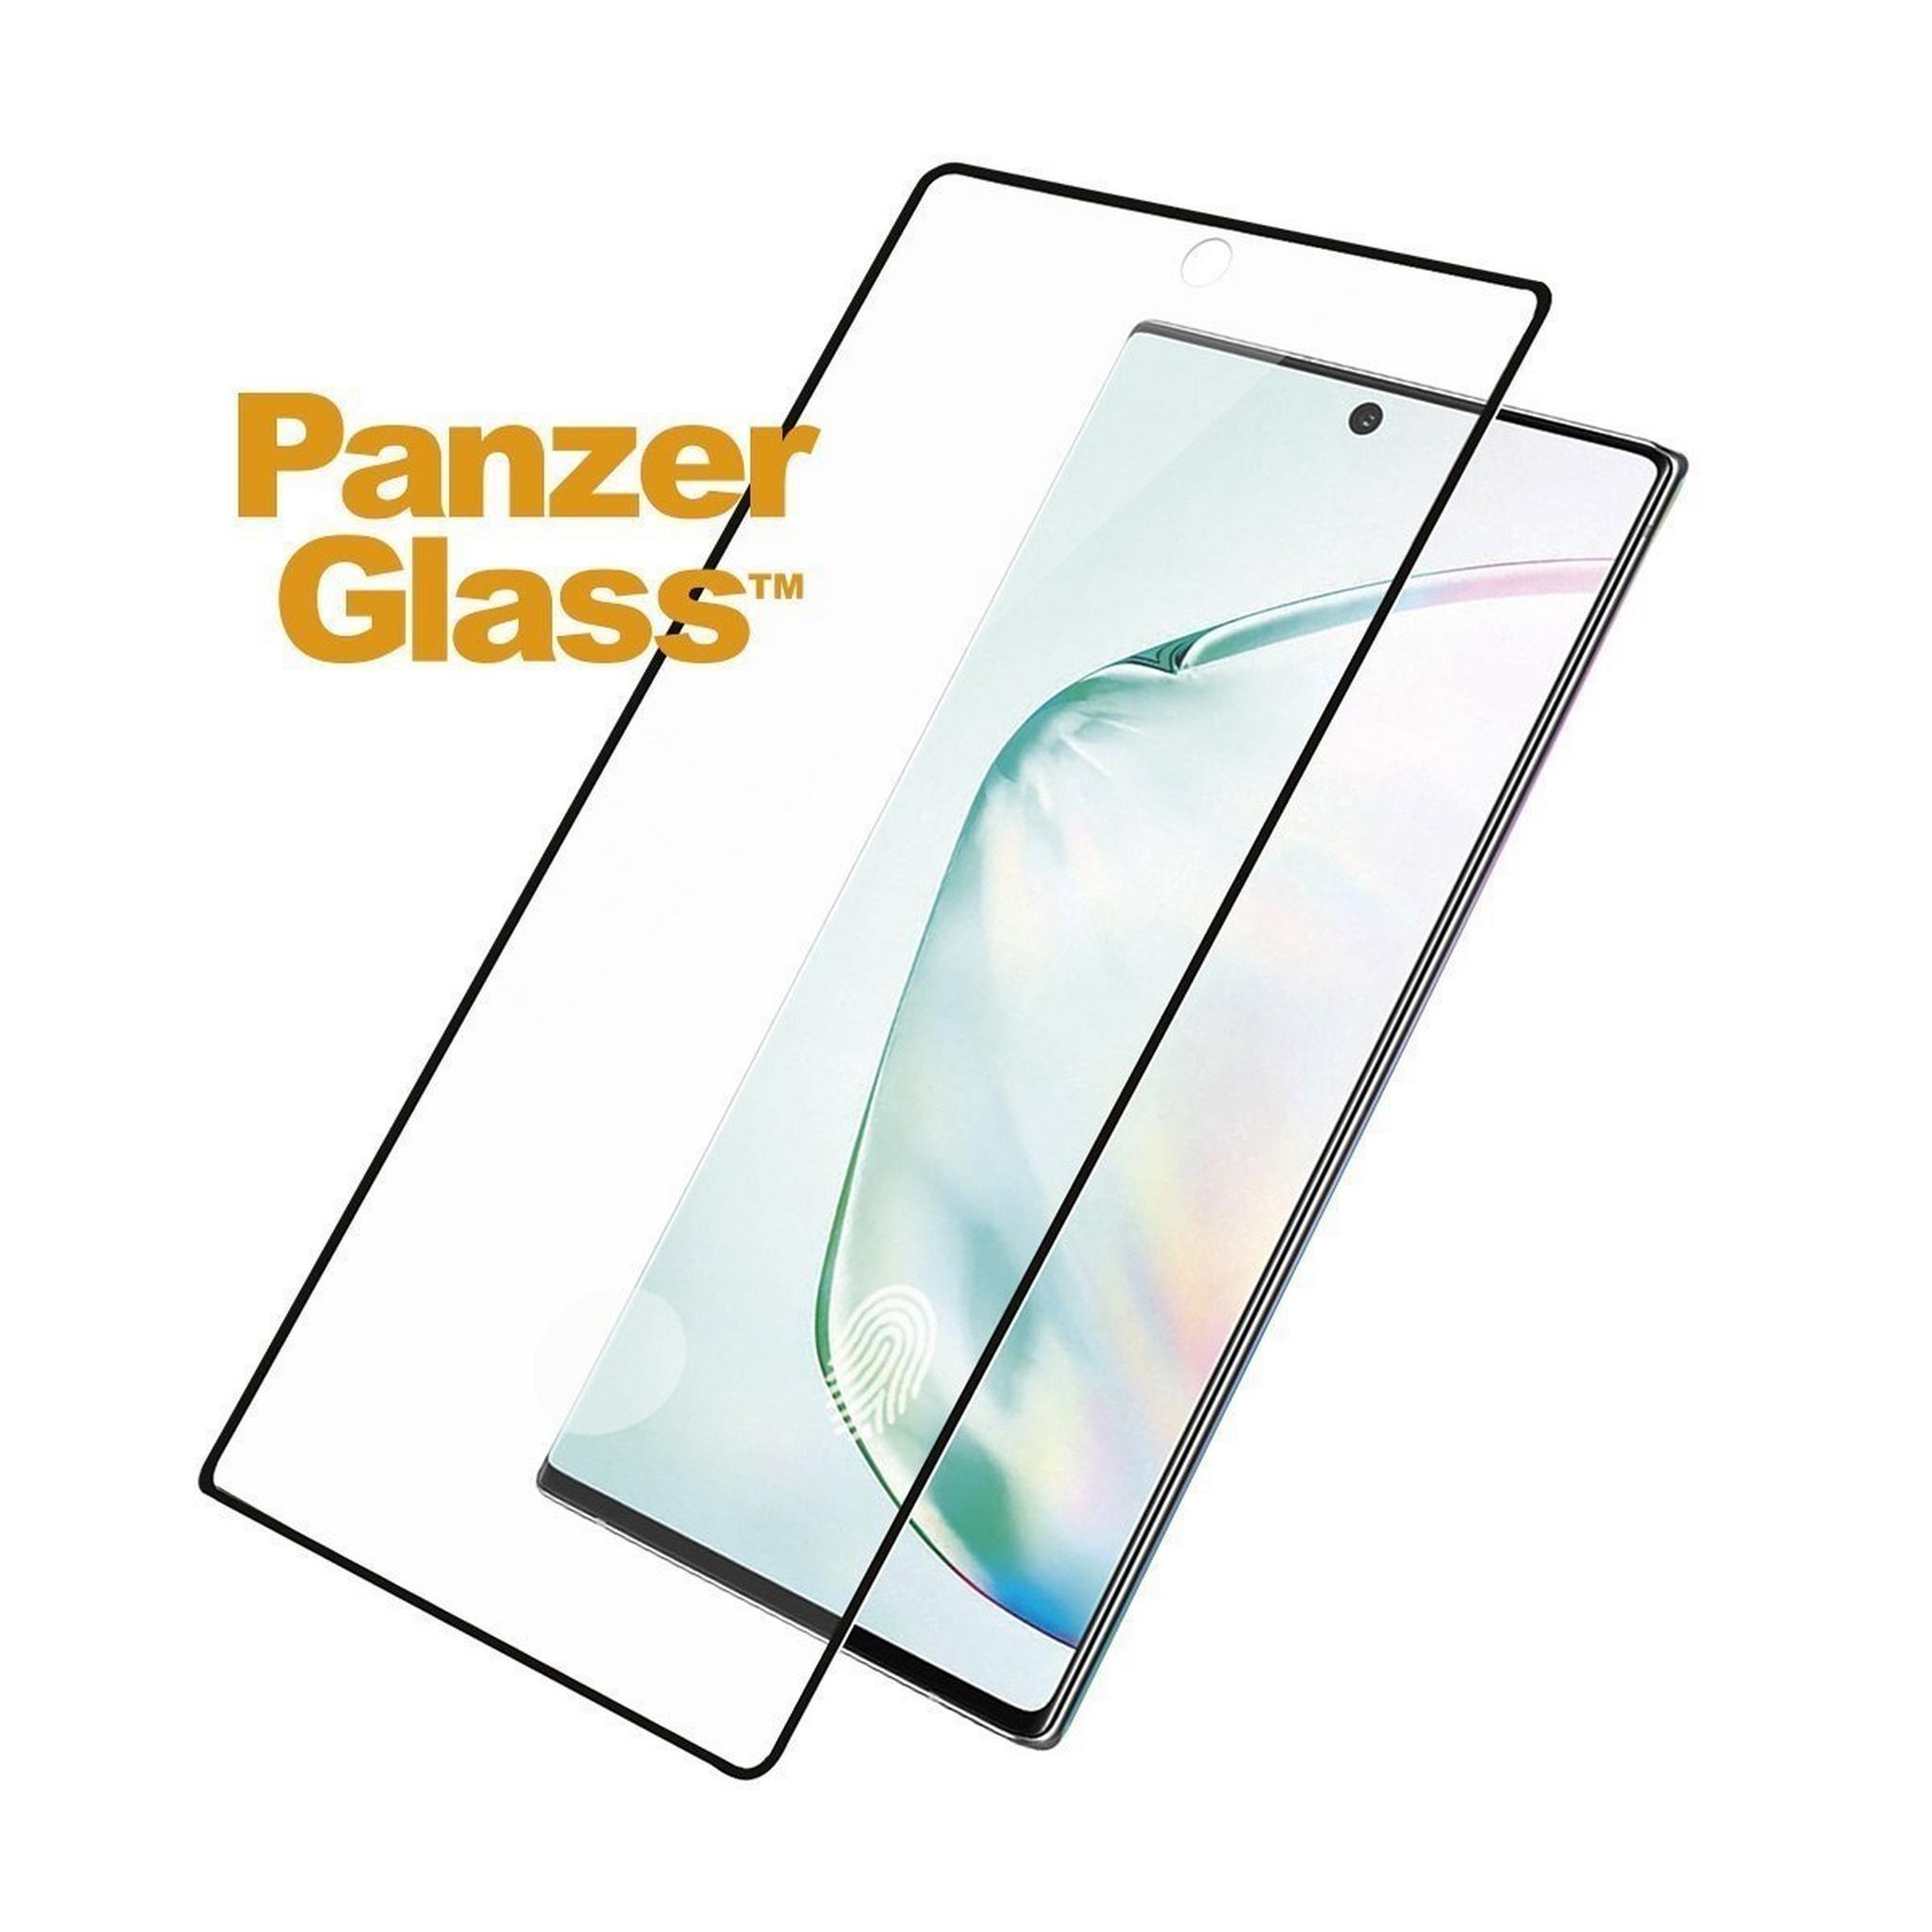 PanzerGlass Samsung Galaxy Note10 Screen Protector - Black